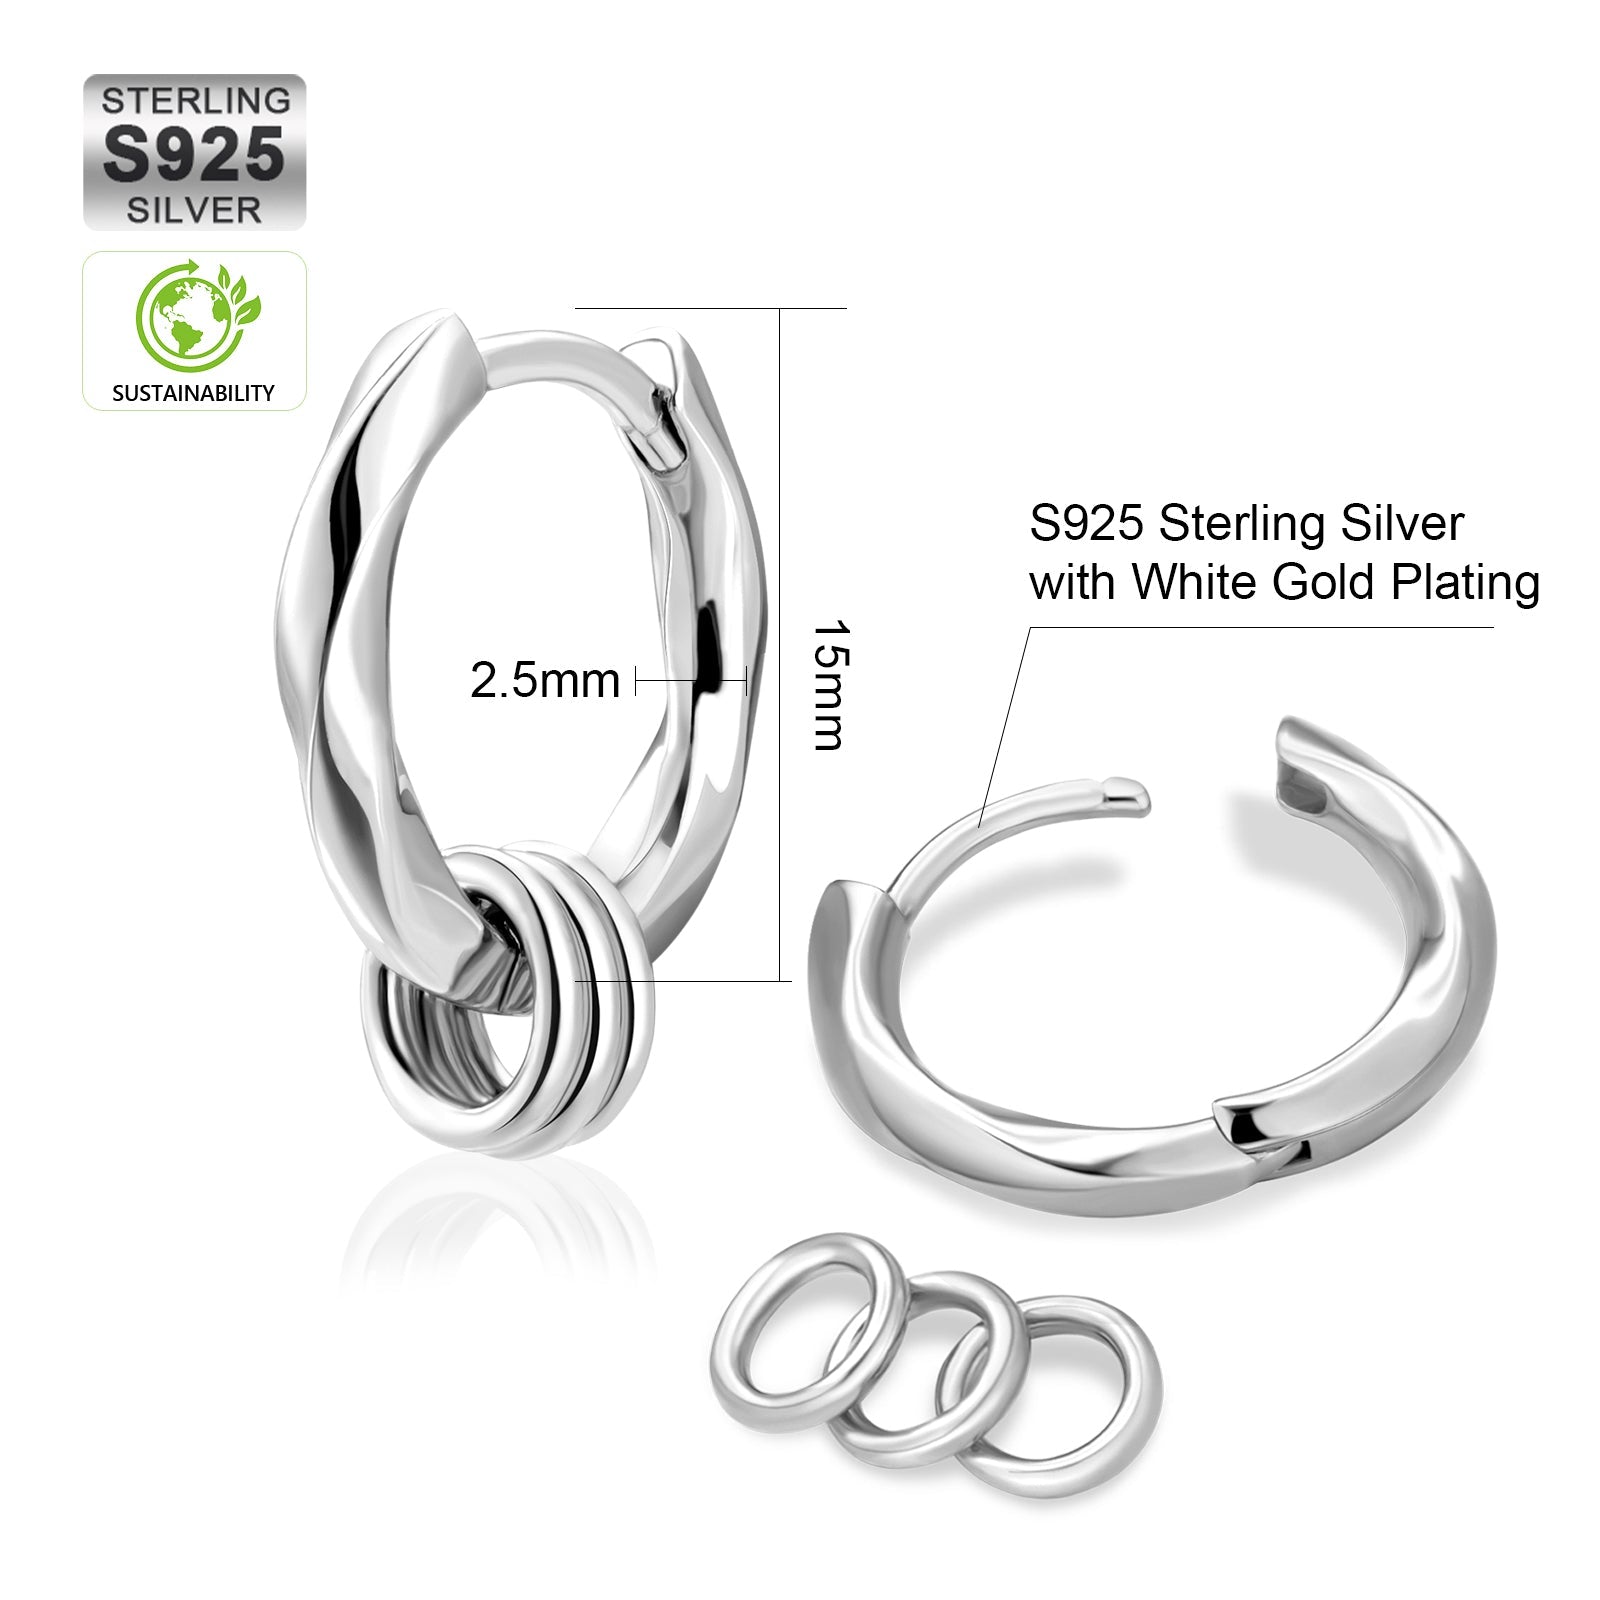 Wholesale Men's Earrings 15mm 2in1 Mens Hoop Earring Twisted with Detachable Rings 925 Sterling Silver